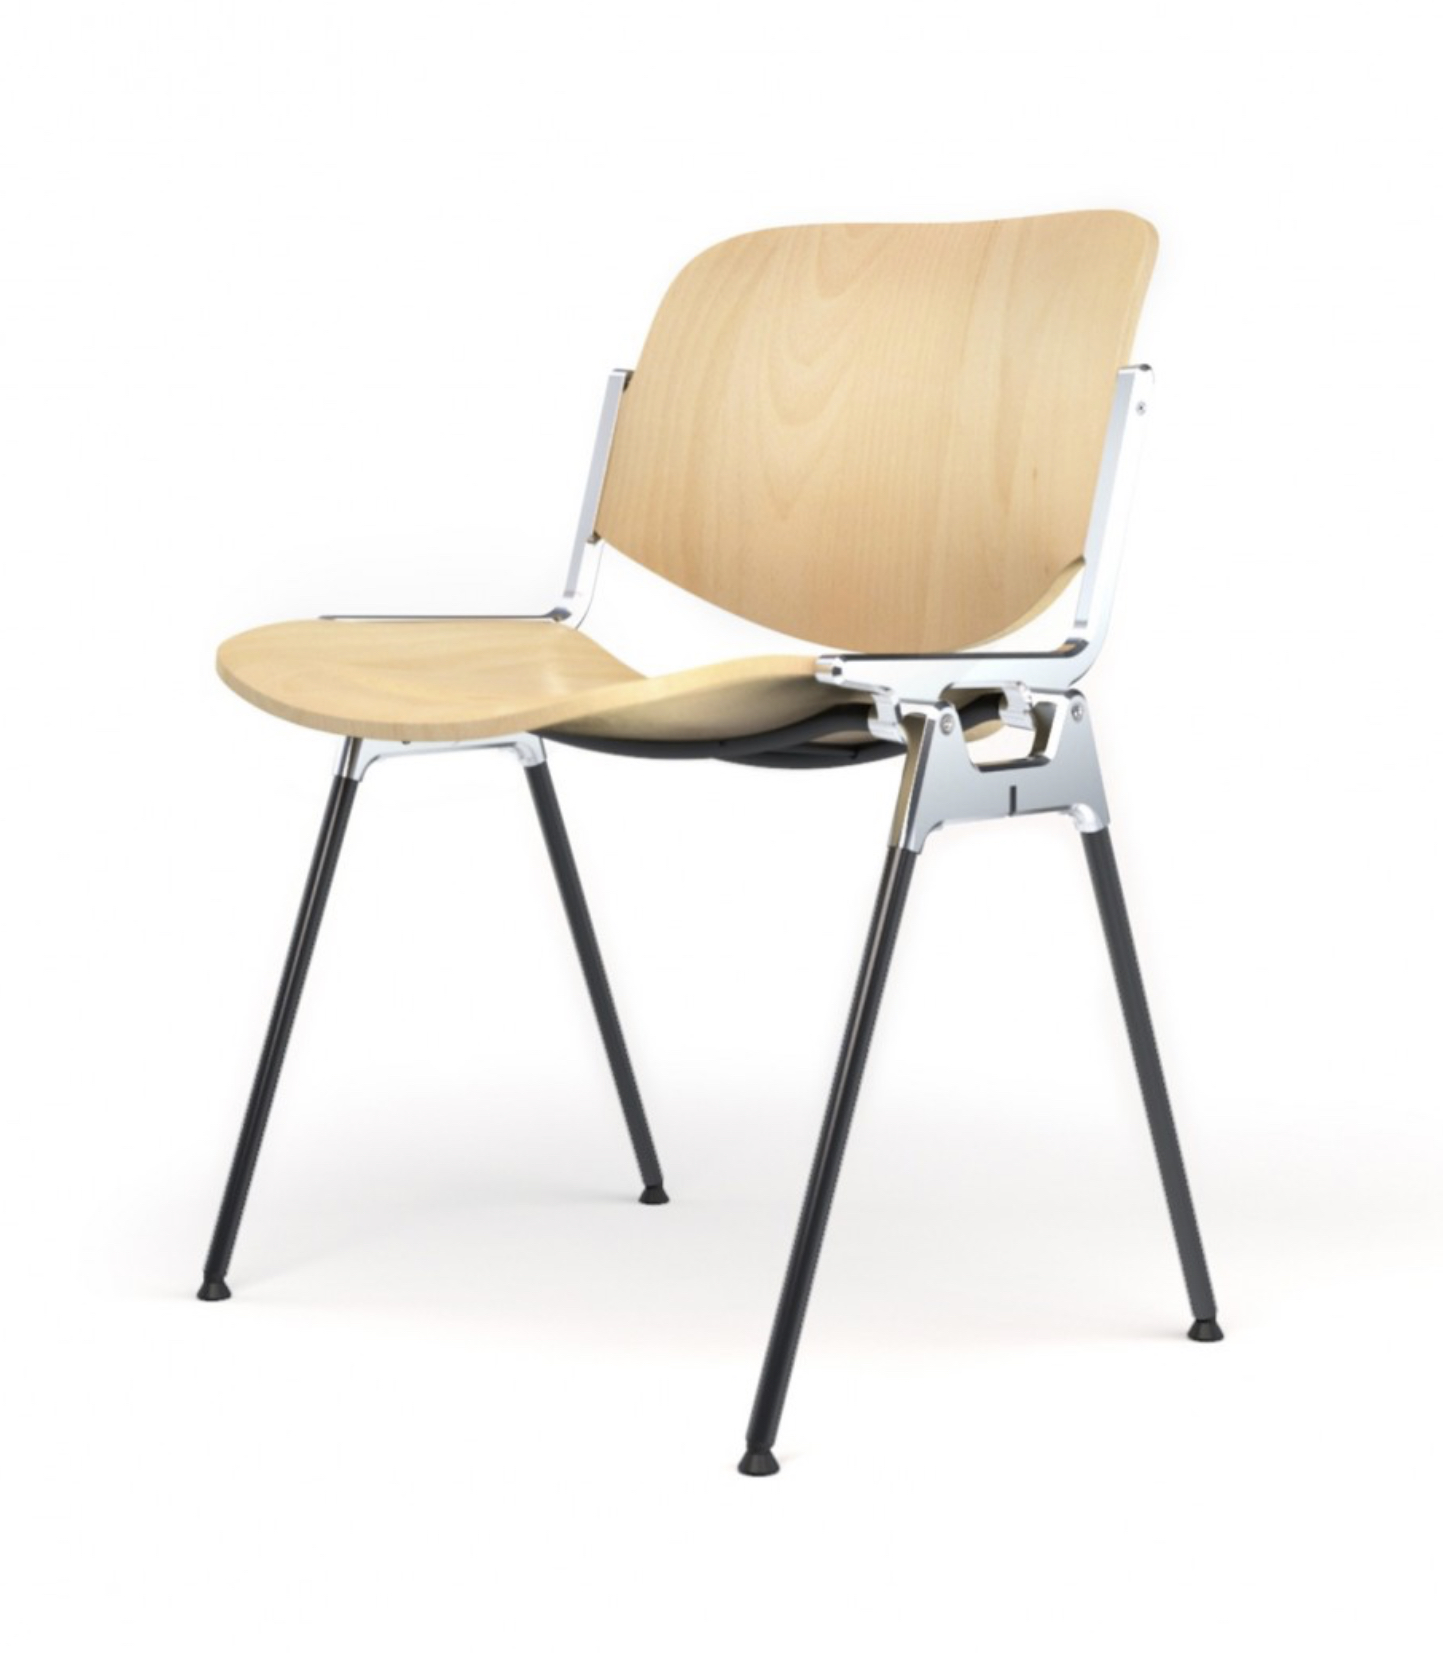 Piretti Chair DSC 106 by Castelli